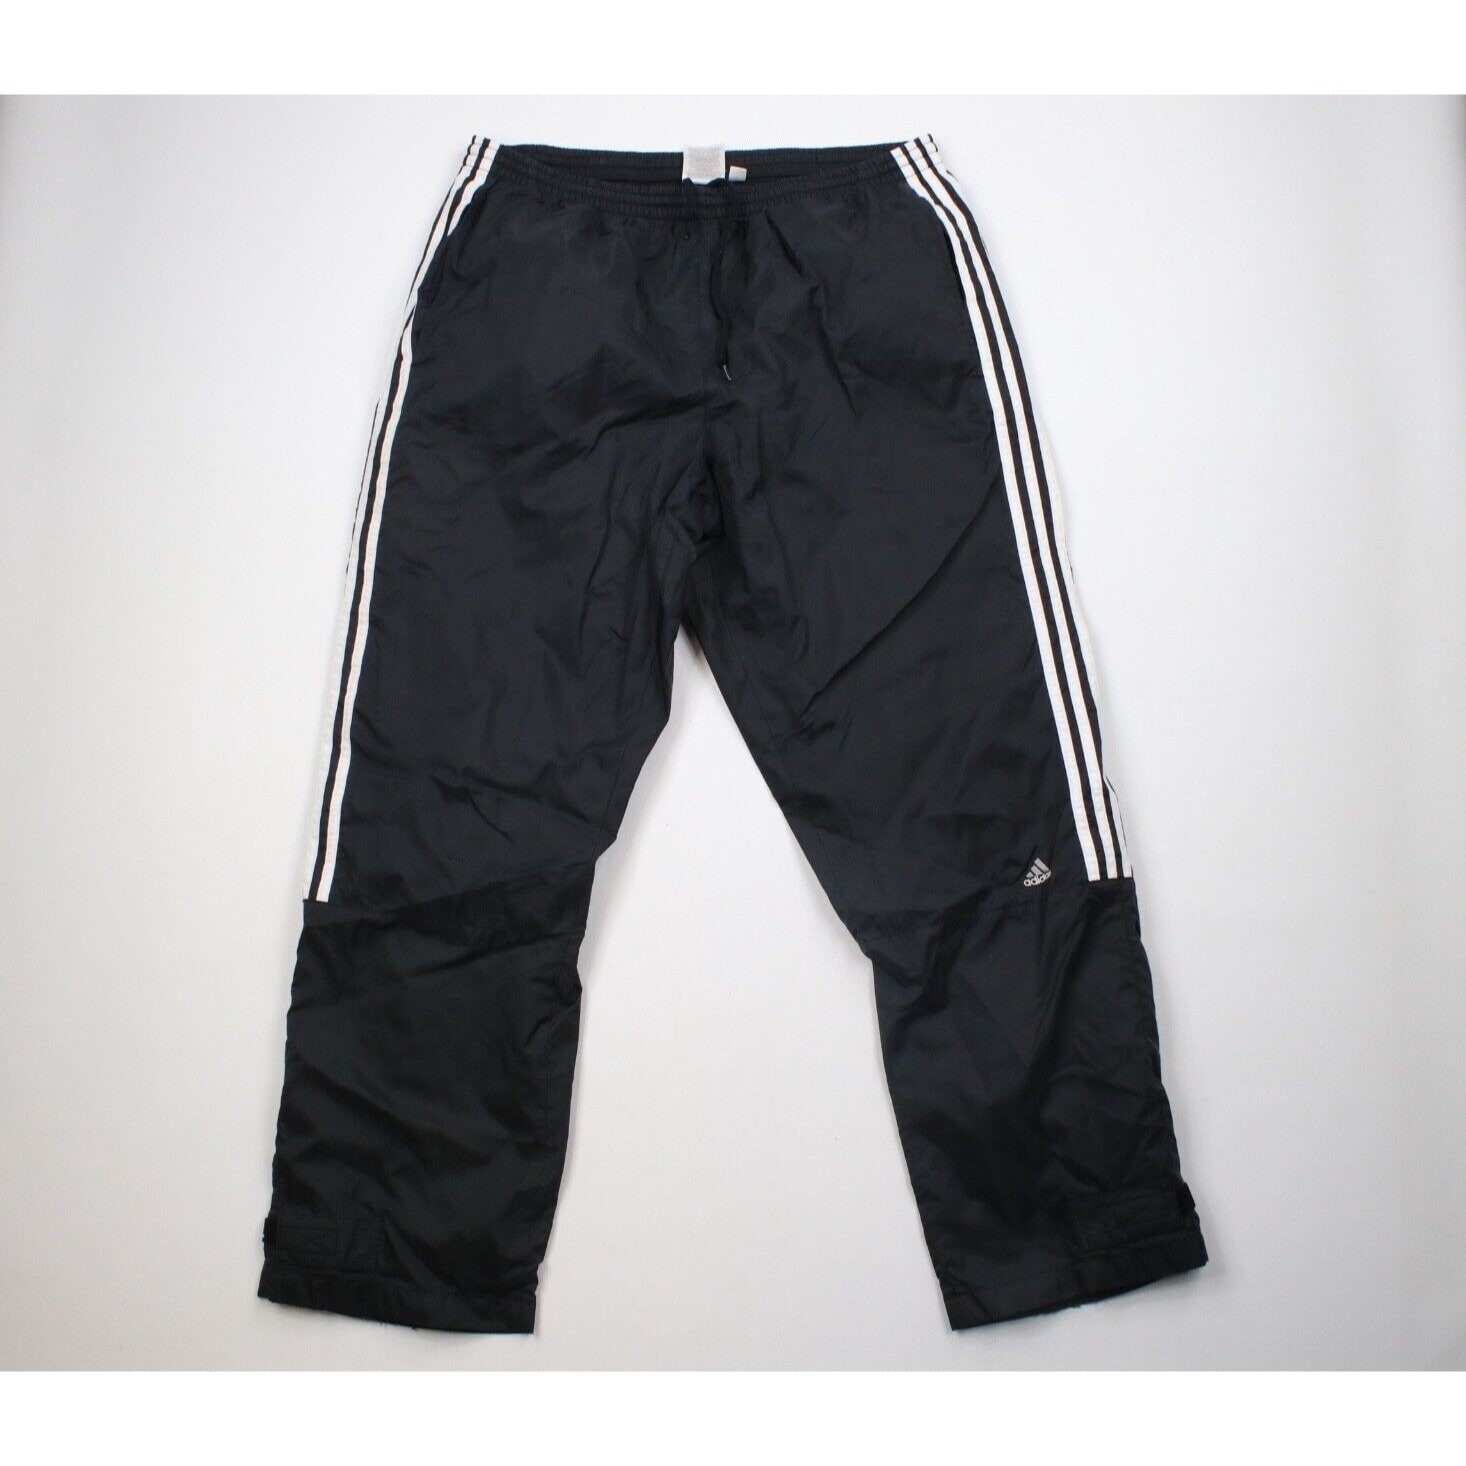 Adidas Originals 90's Vintage Track Pants Trousers Black Shiny